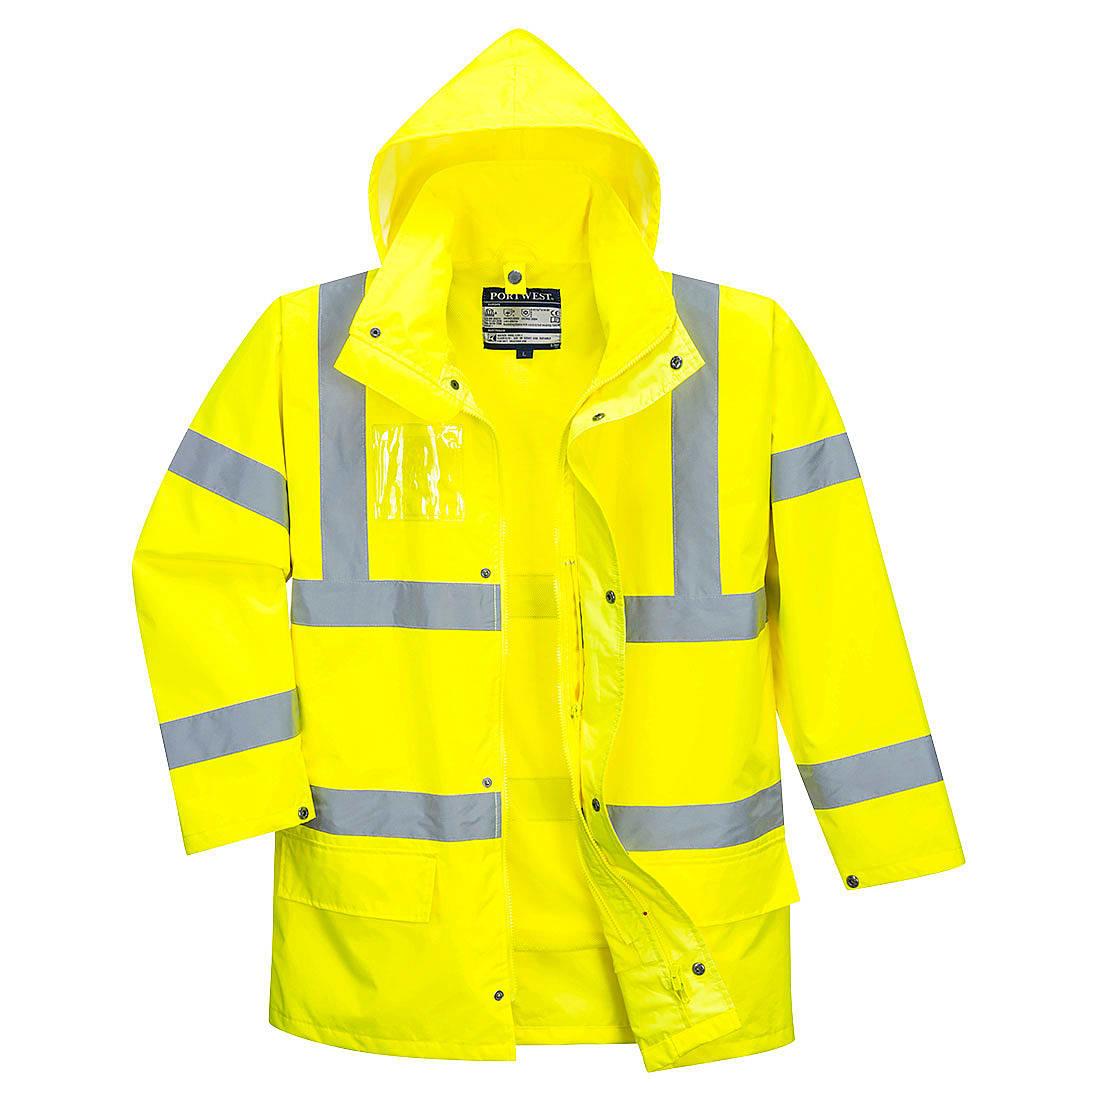 Portwest Hi-Viz Essential 5-in-1 Jacket in Yellow (Product Code: S765)